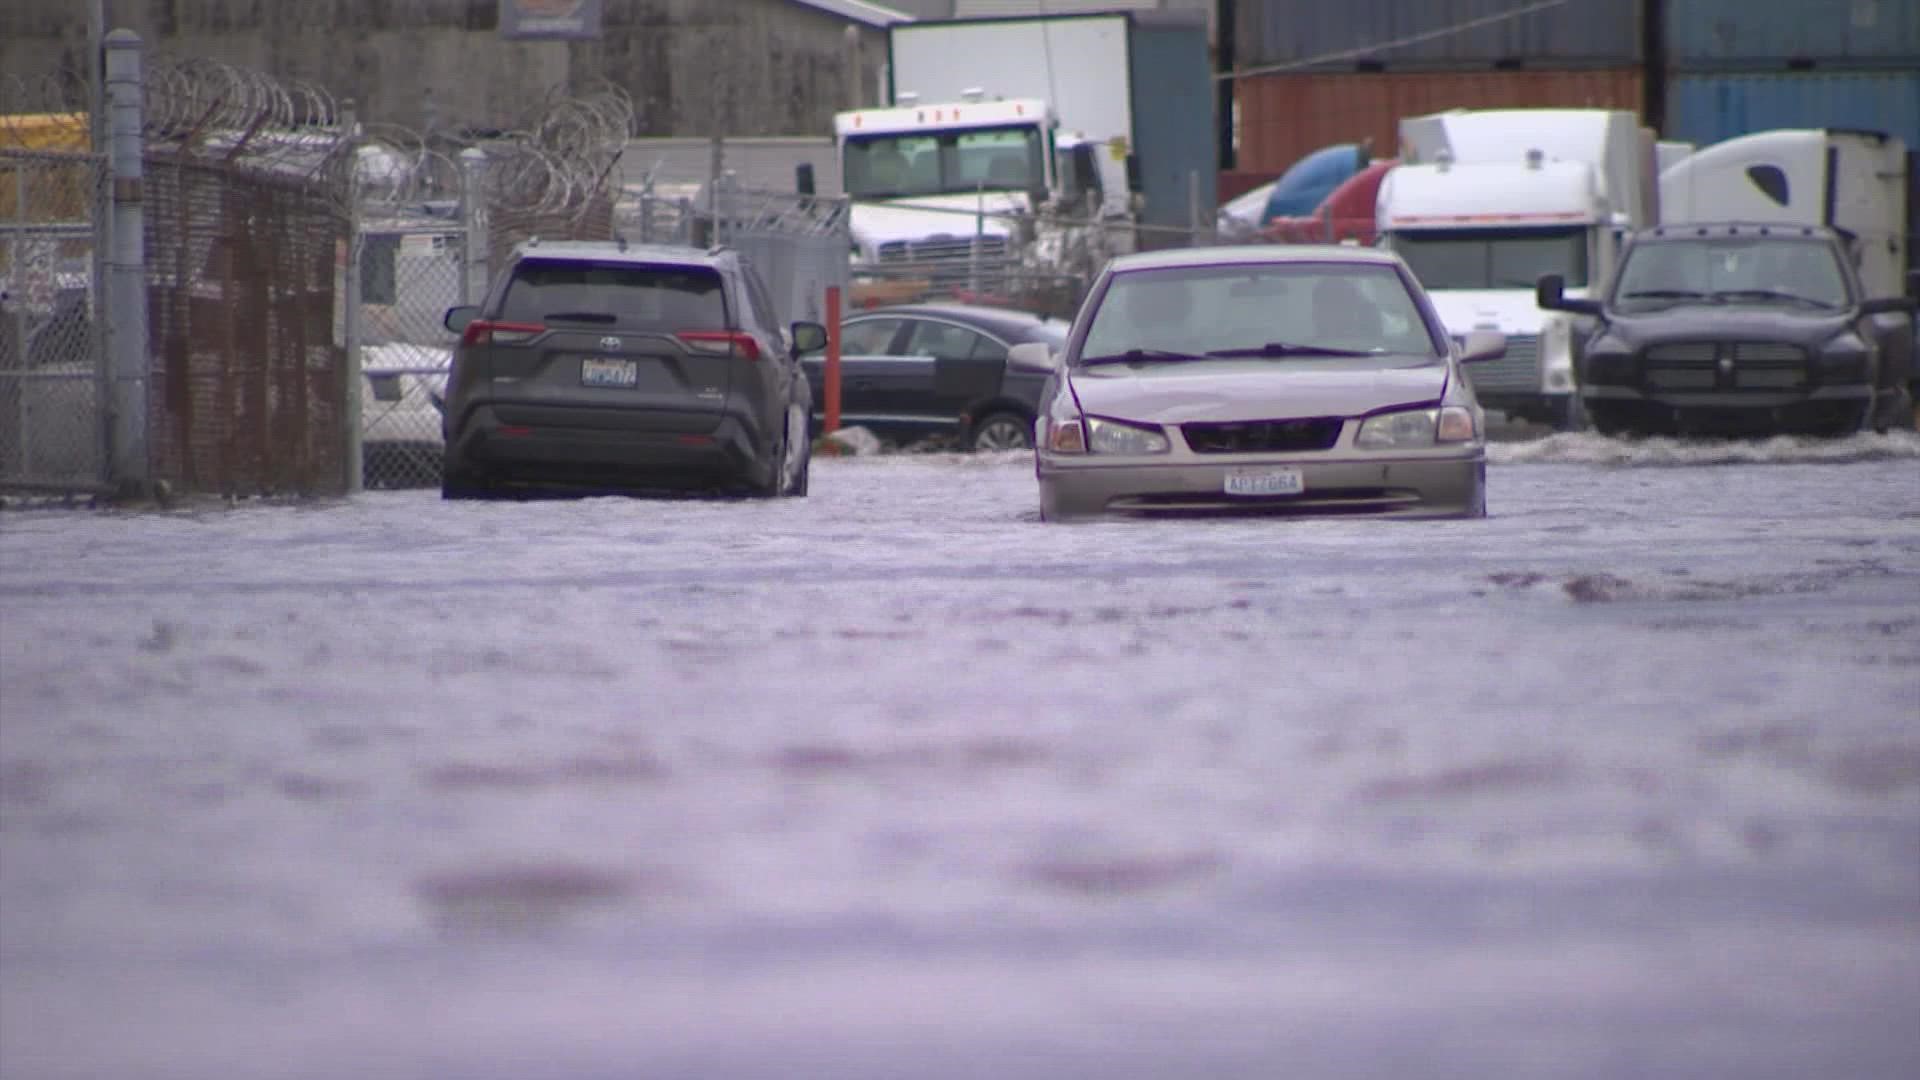 Heavy rain and winds are impacting communities across western Washington on Tuesday.